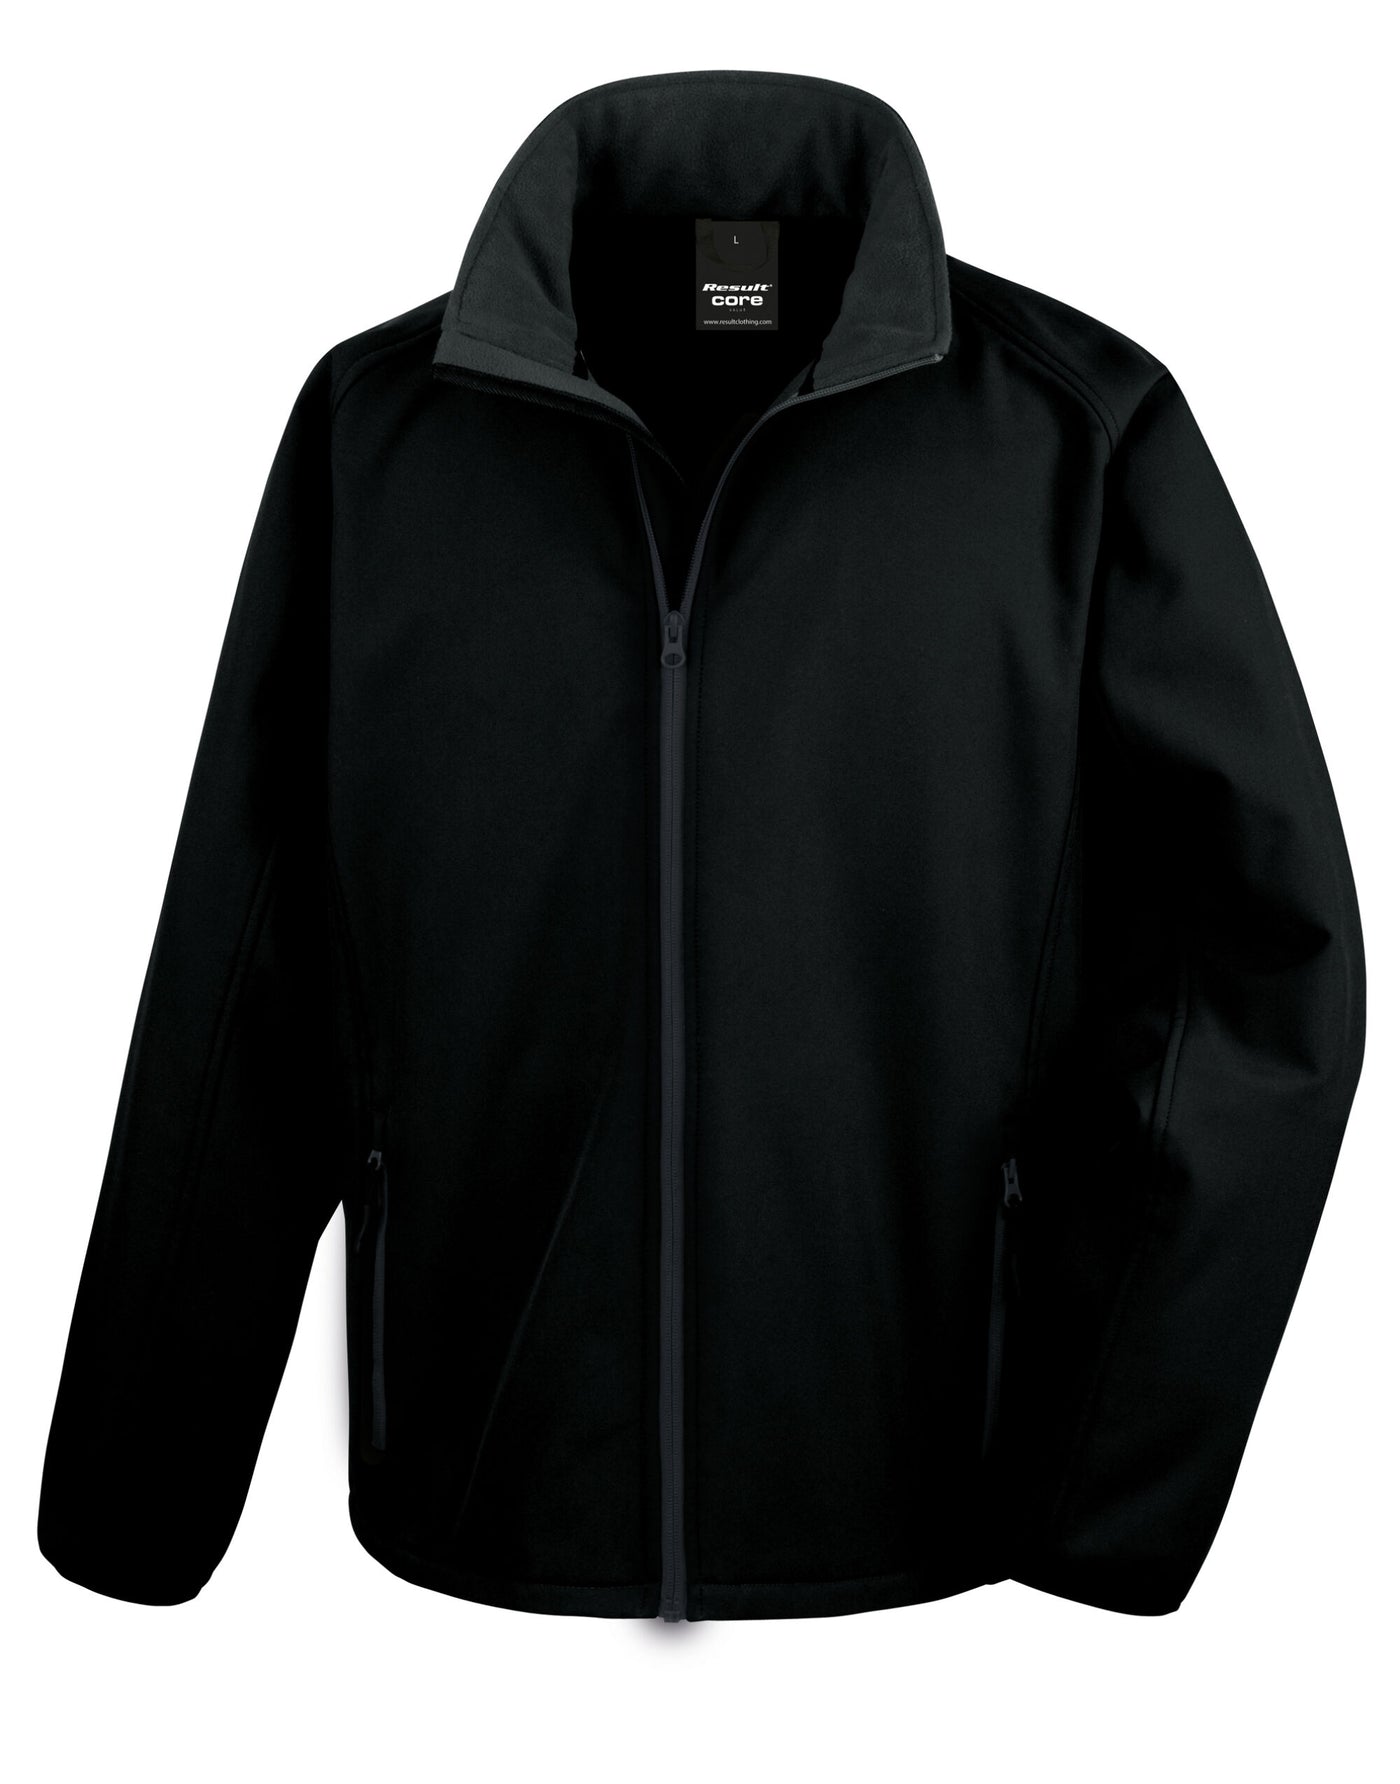 Men's Printable Soft Shell Jacket in Black